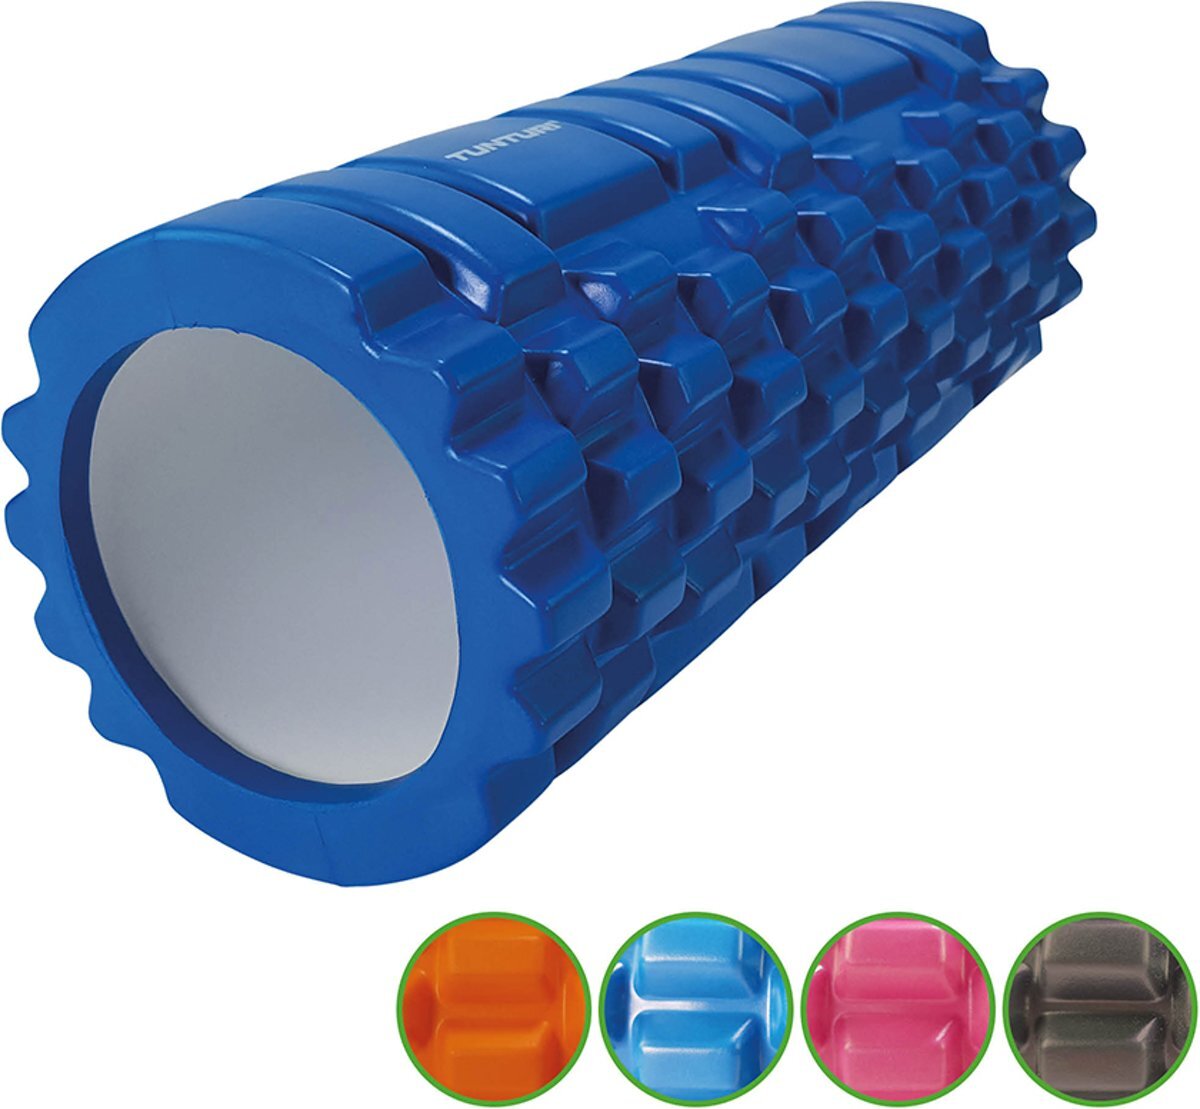 Tunturi Yoga Grid Foam Roller Massage - Fitness Roller - Triggerpoint massage - 33cm - Blauw